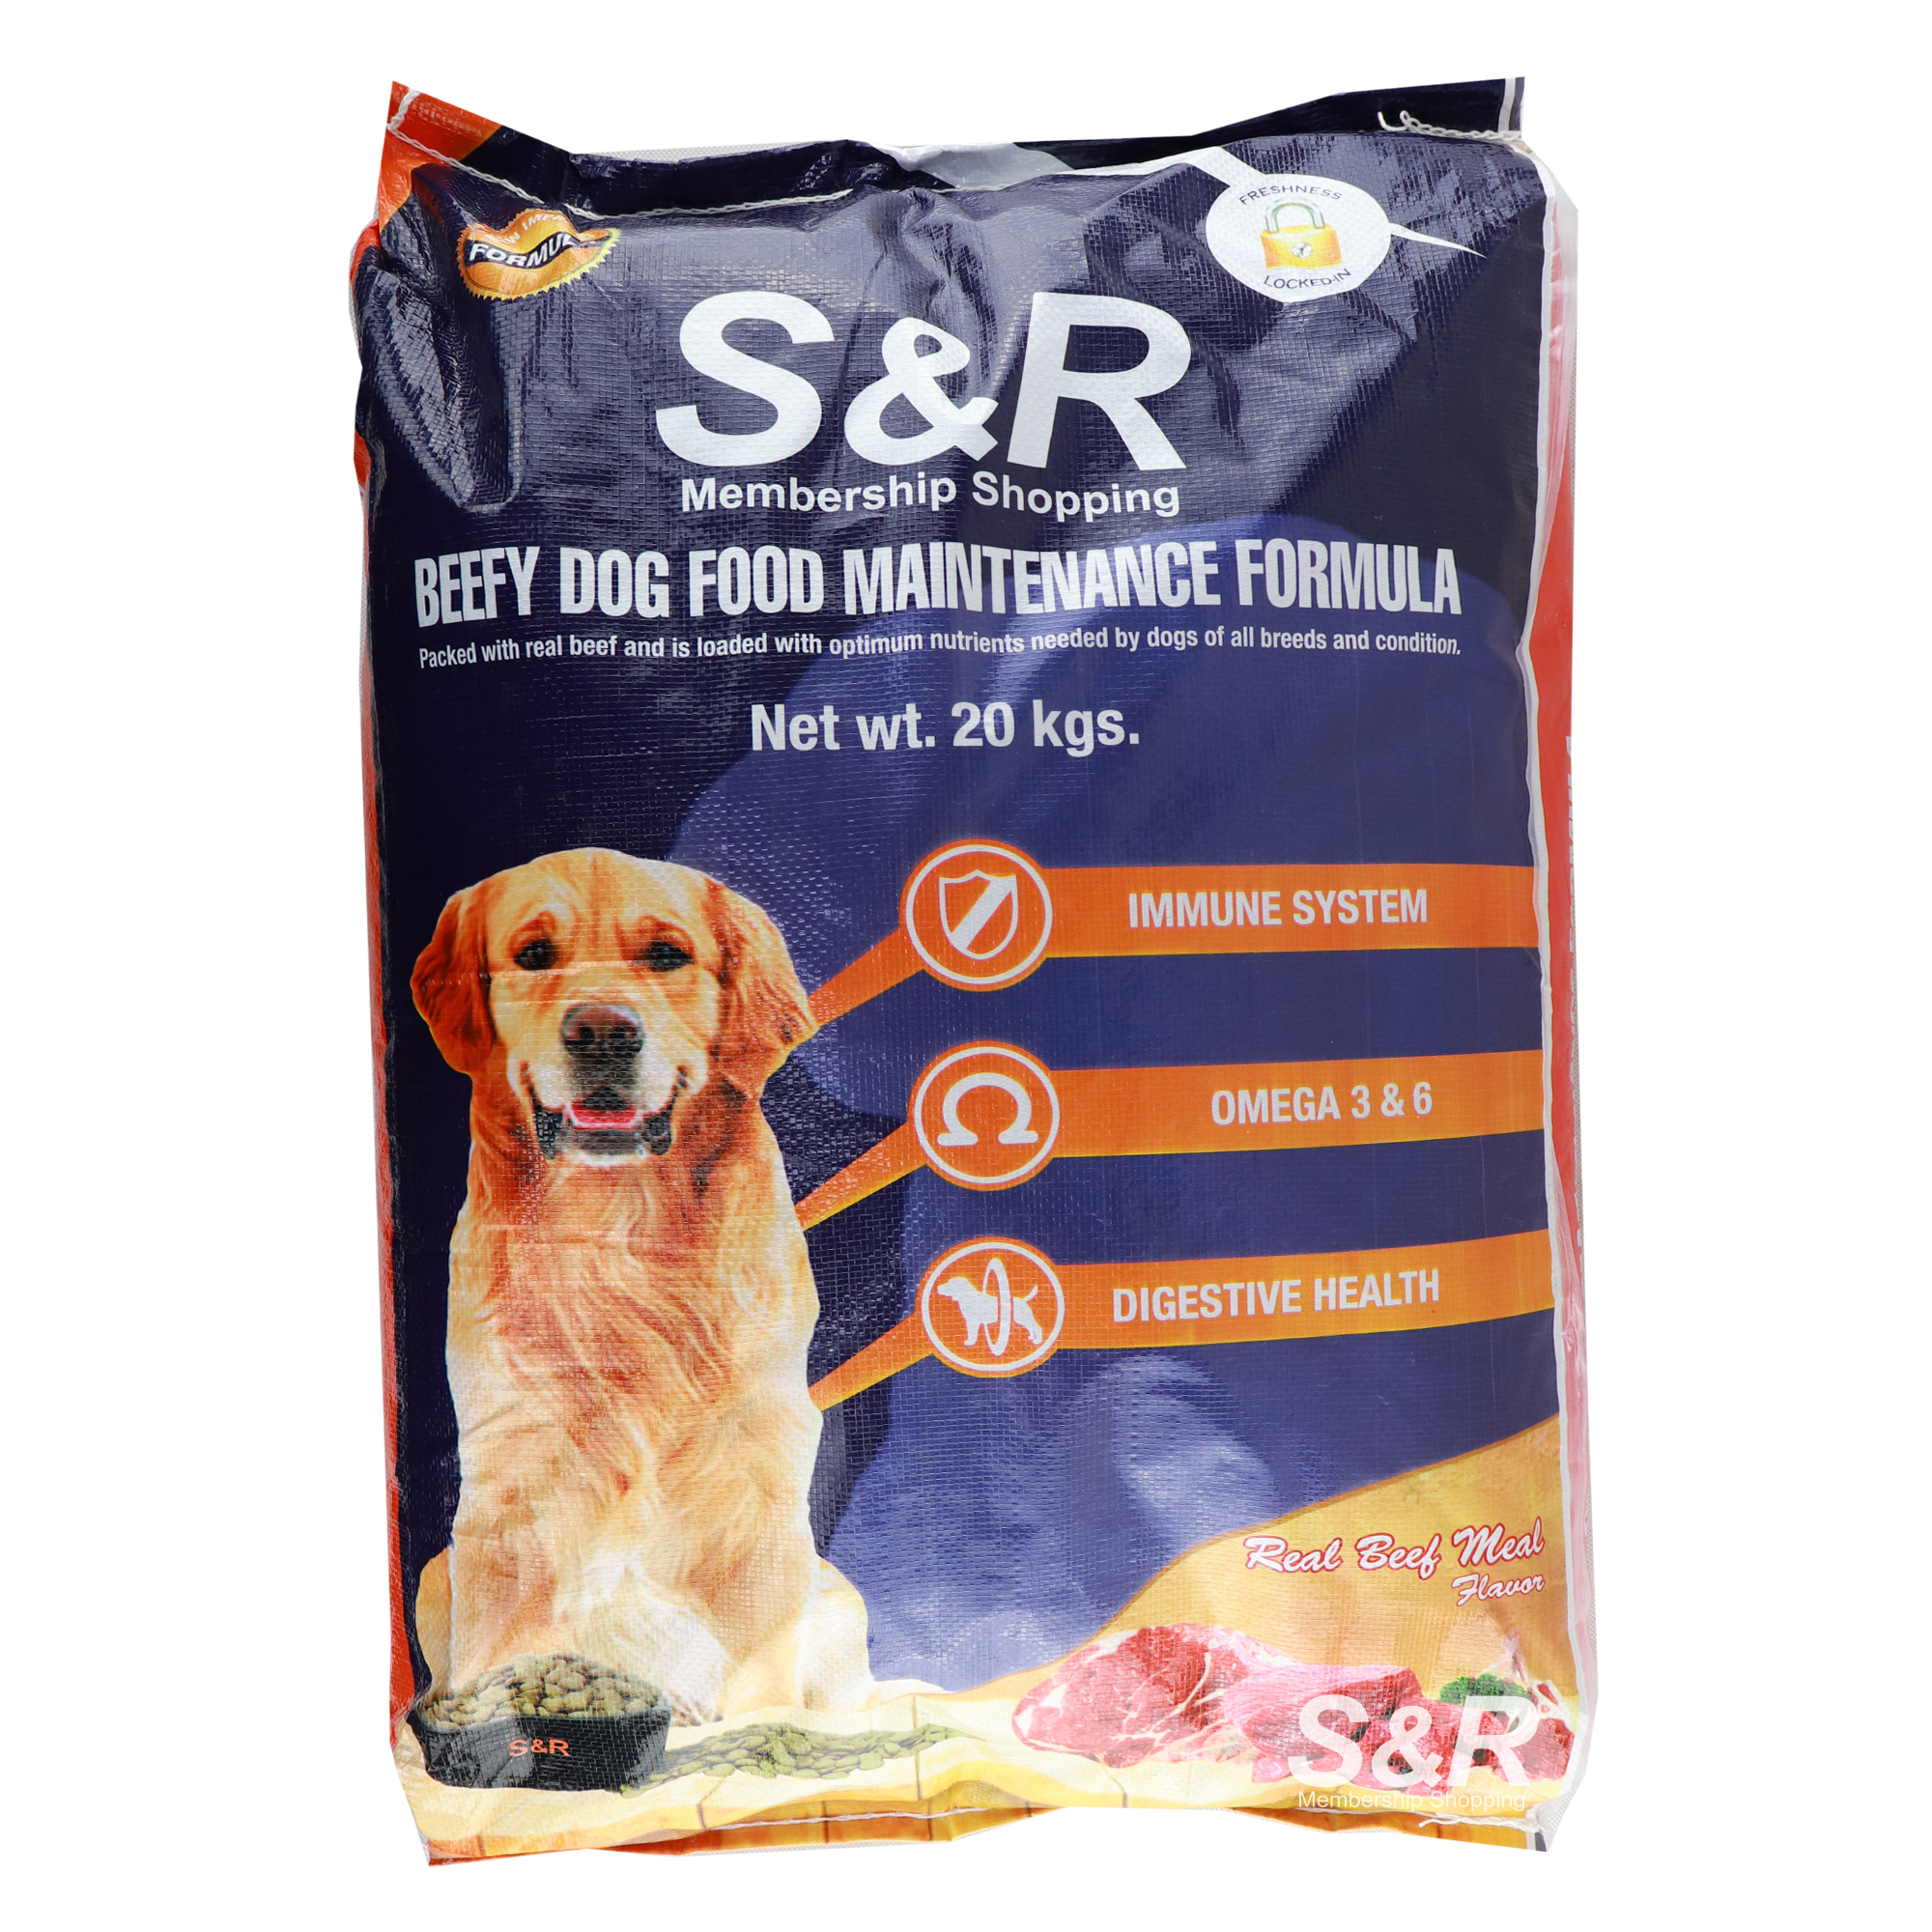 S&R Membership Shopping Beefy Dog Food Maintenance Formula 20kg